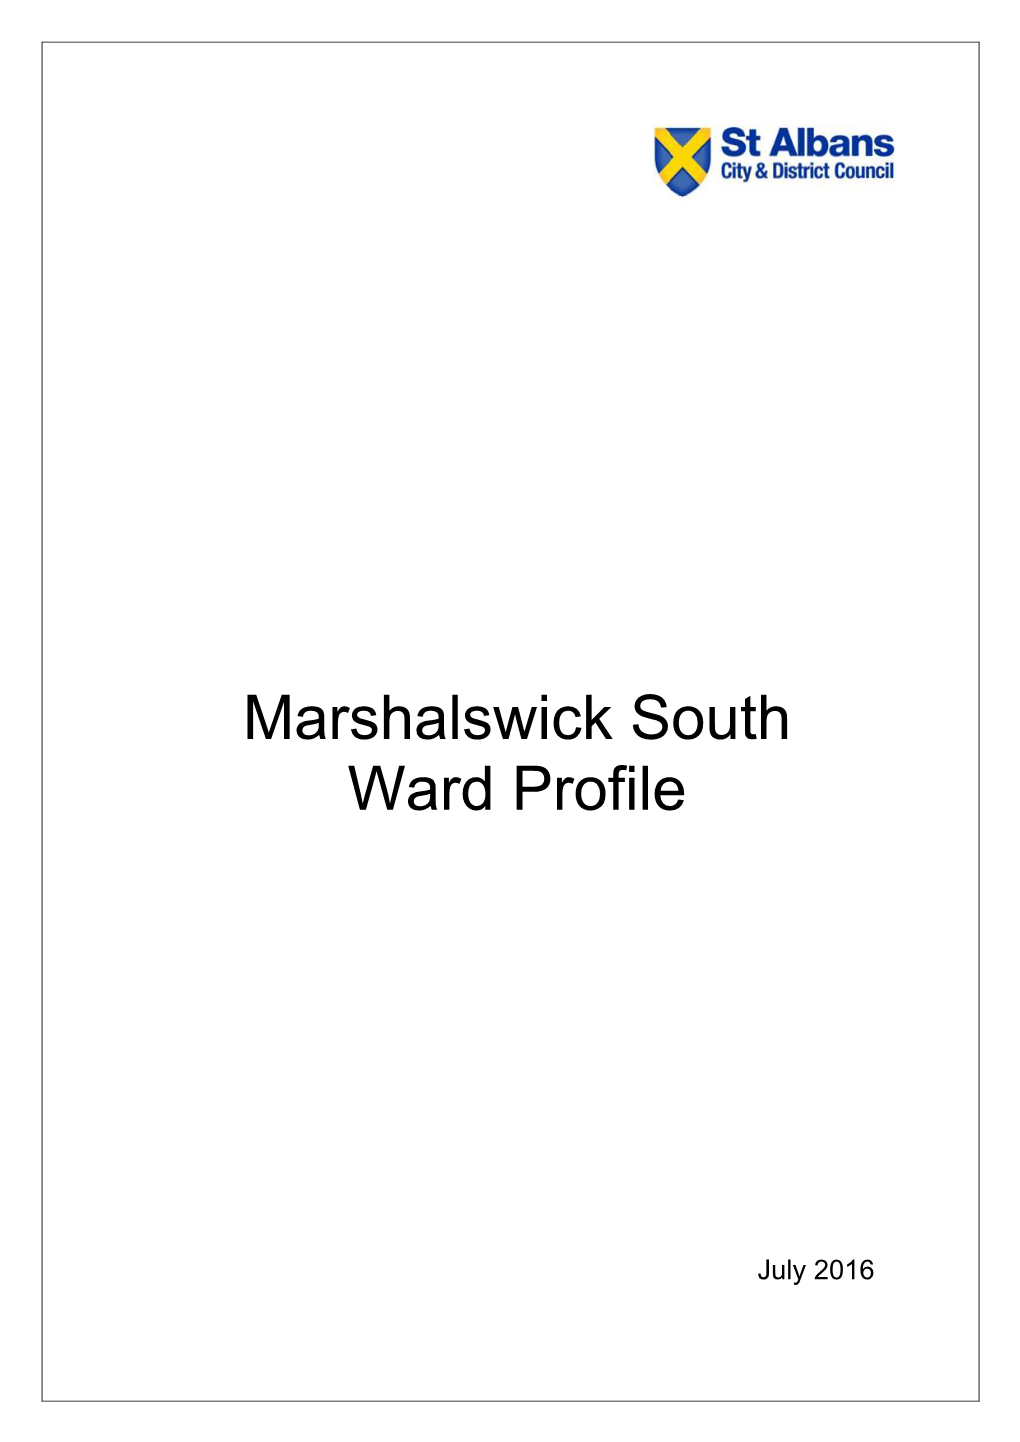 Marshalswick South Ward Profile